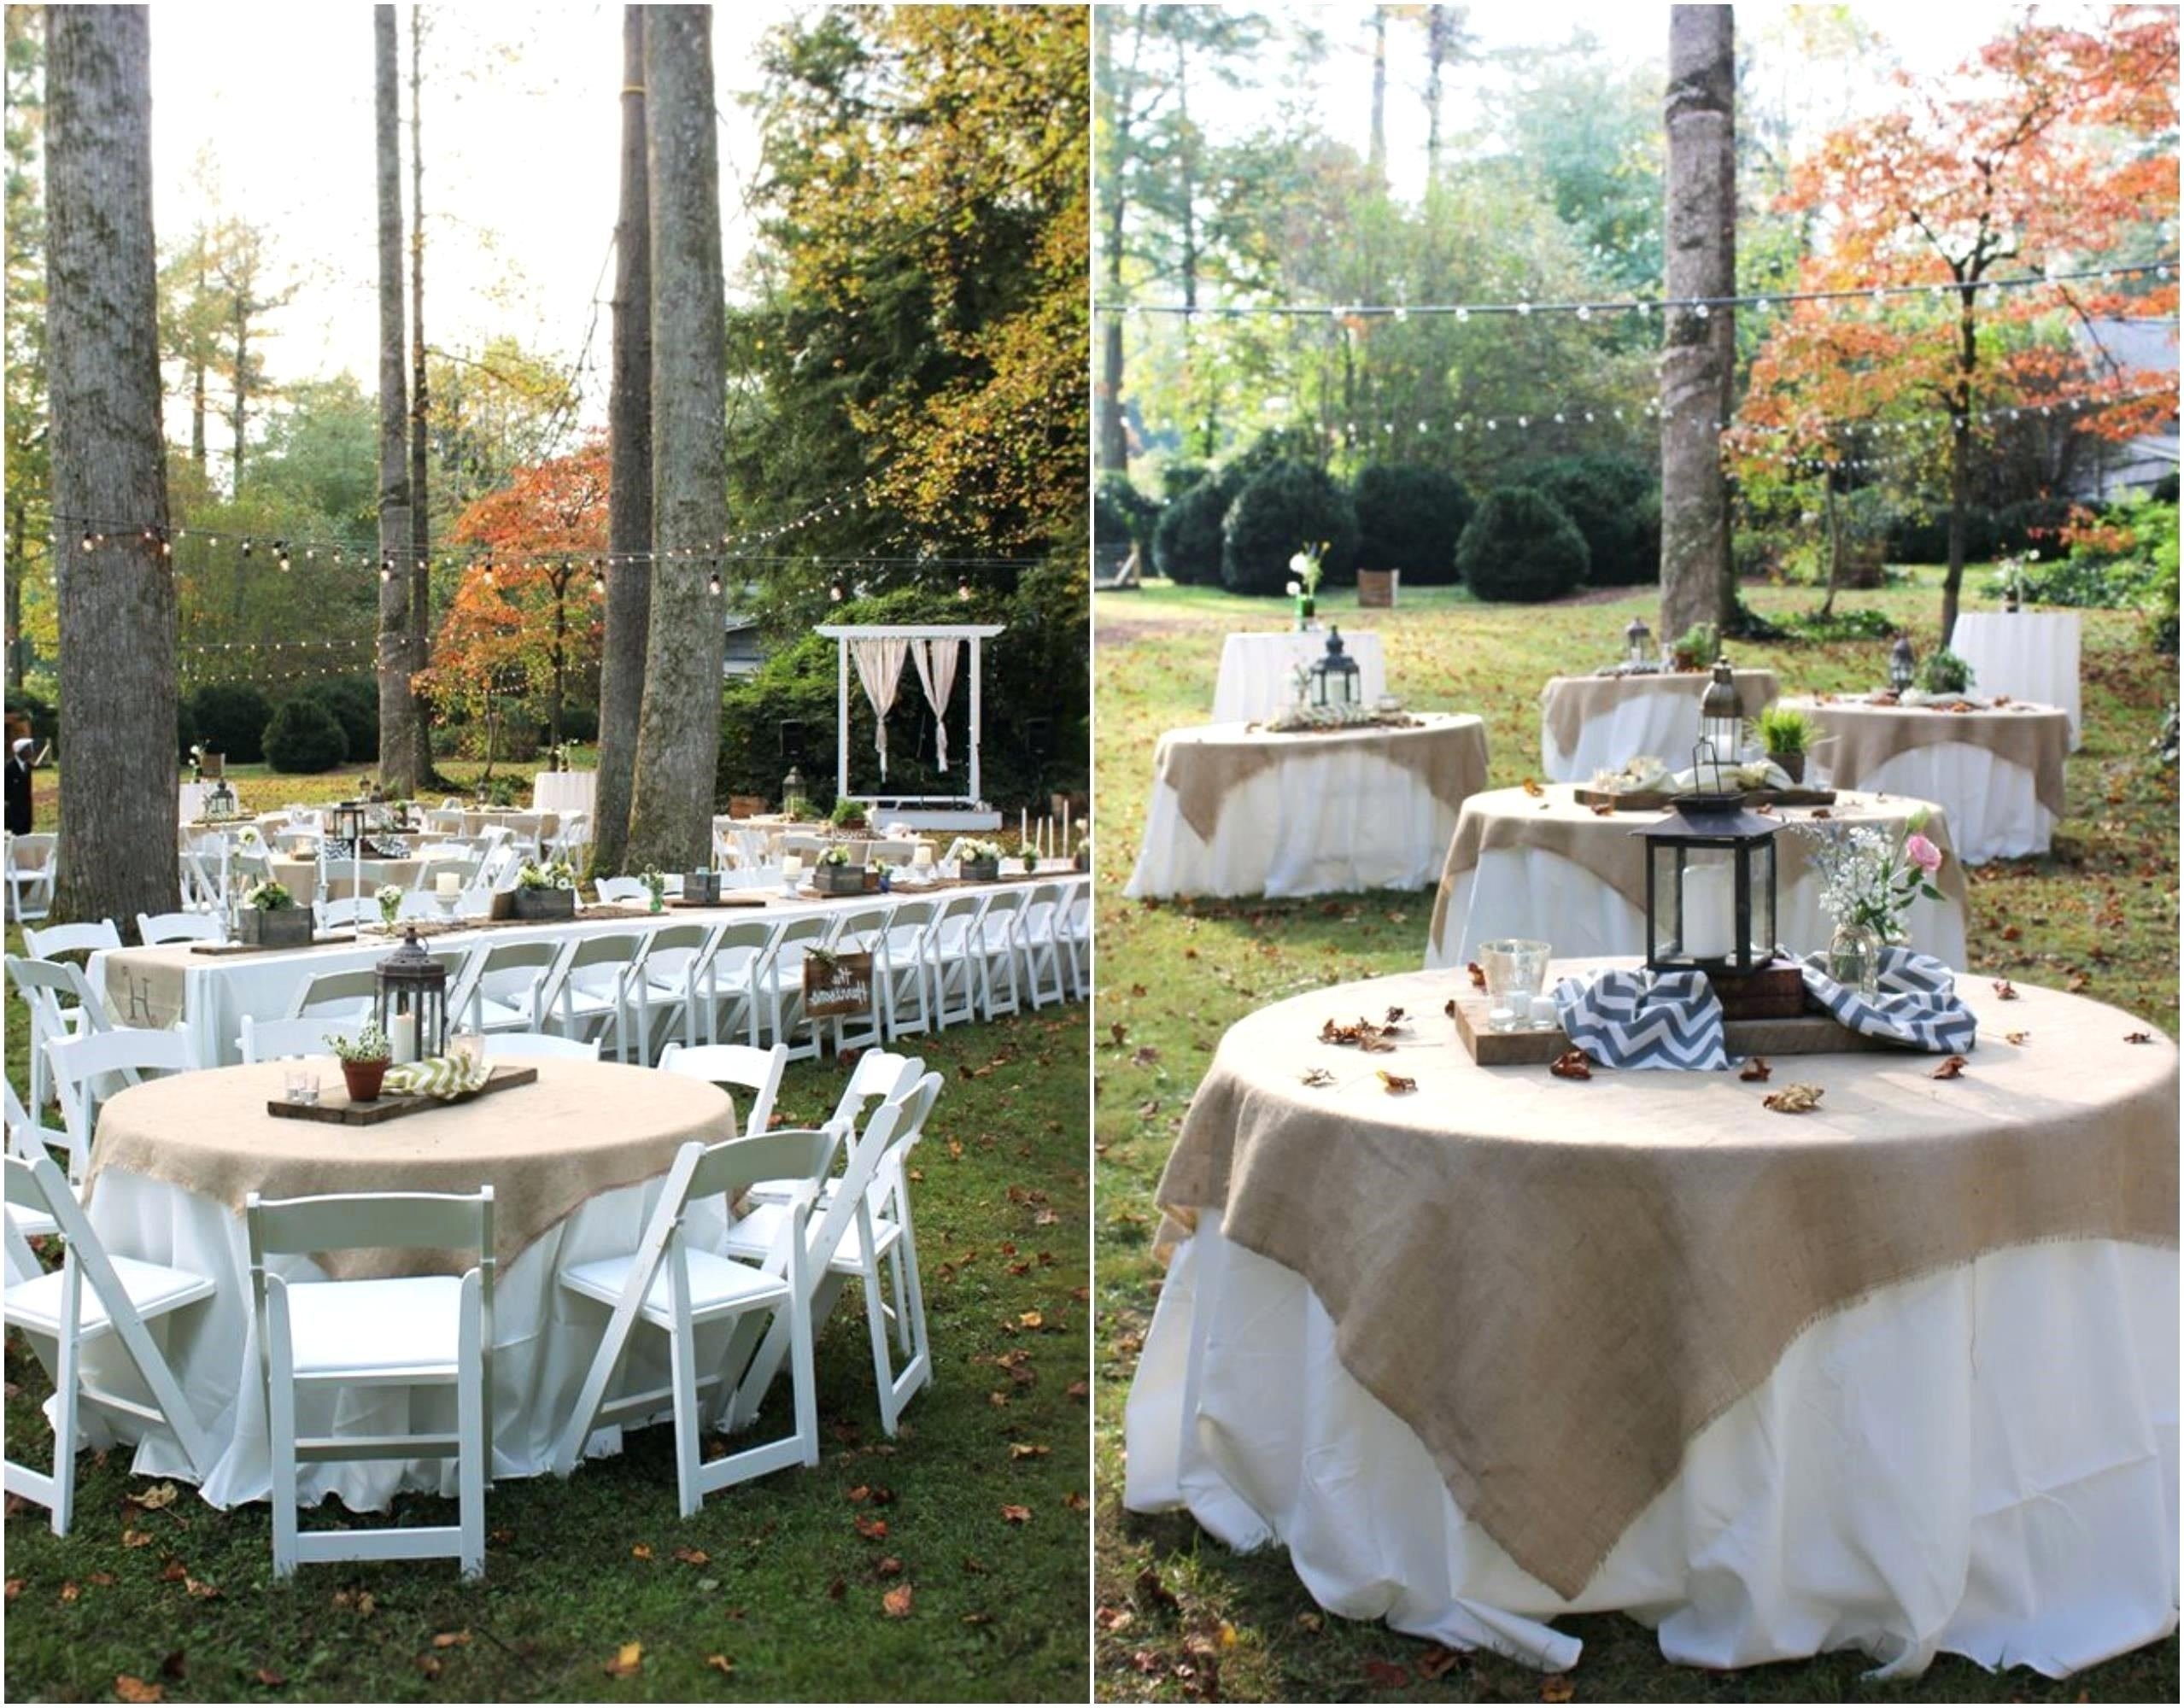 10 Unique Small Backyard Wedding Reception Ideas backyard wedding reception ideas inspirational small backyard 2022